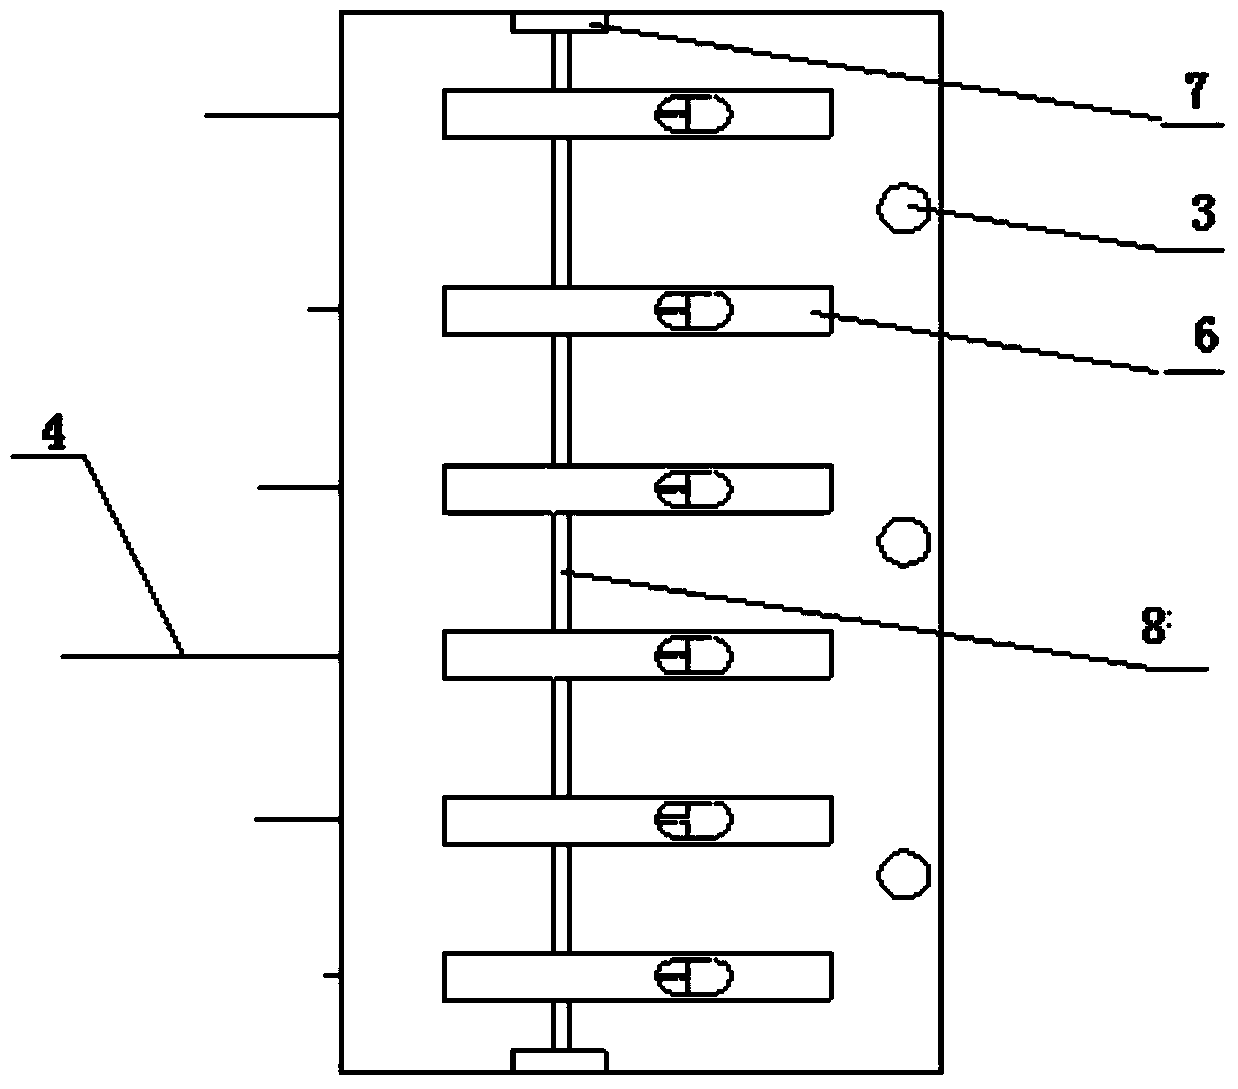 Fine tuning mechanism for wooden guitar